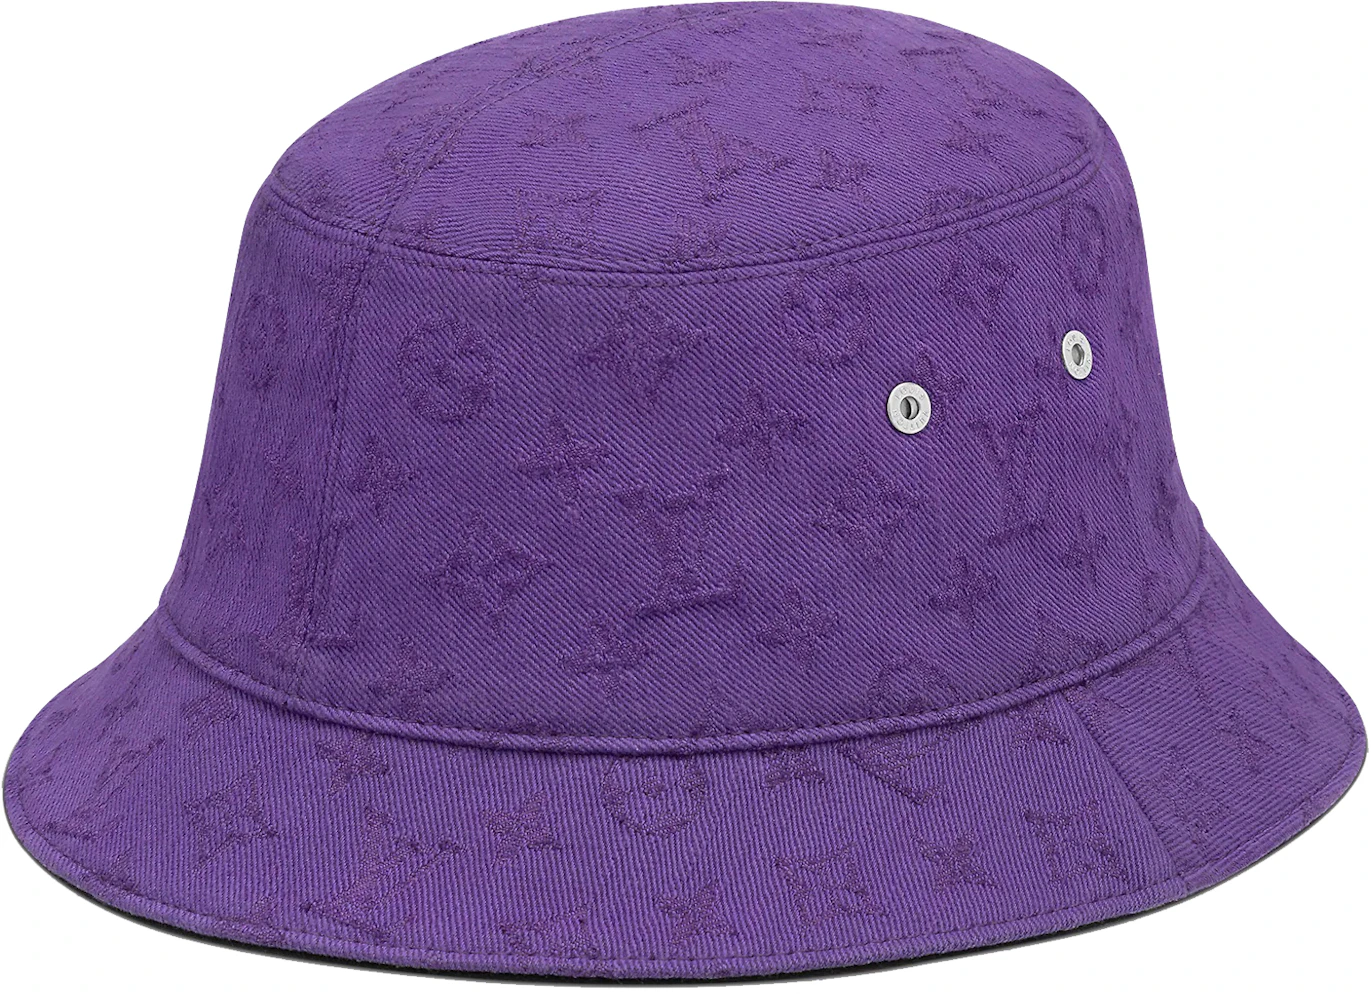 Lv bucket hat - Gem